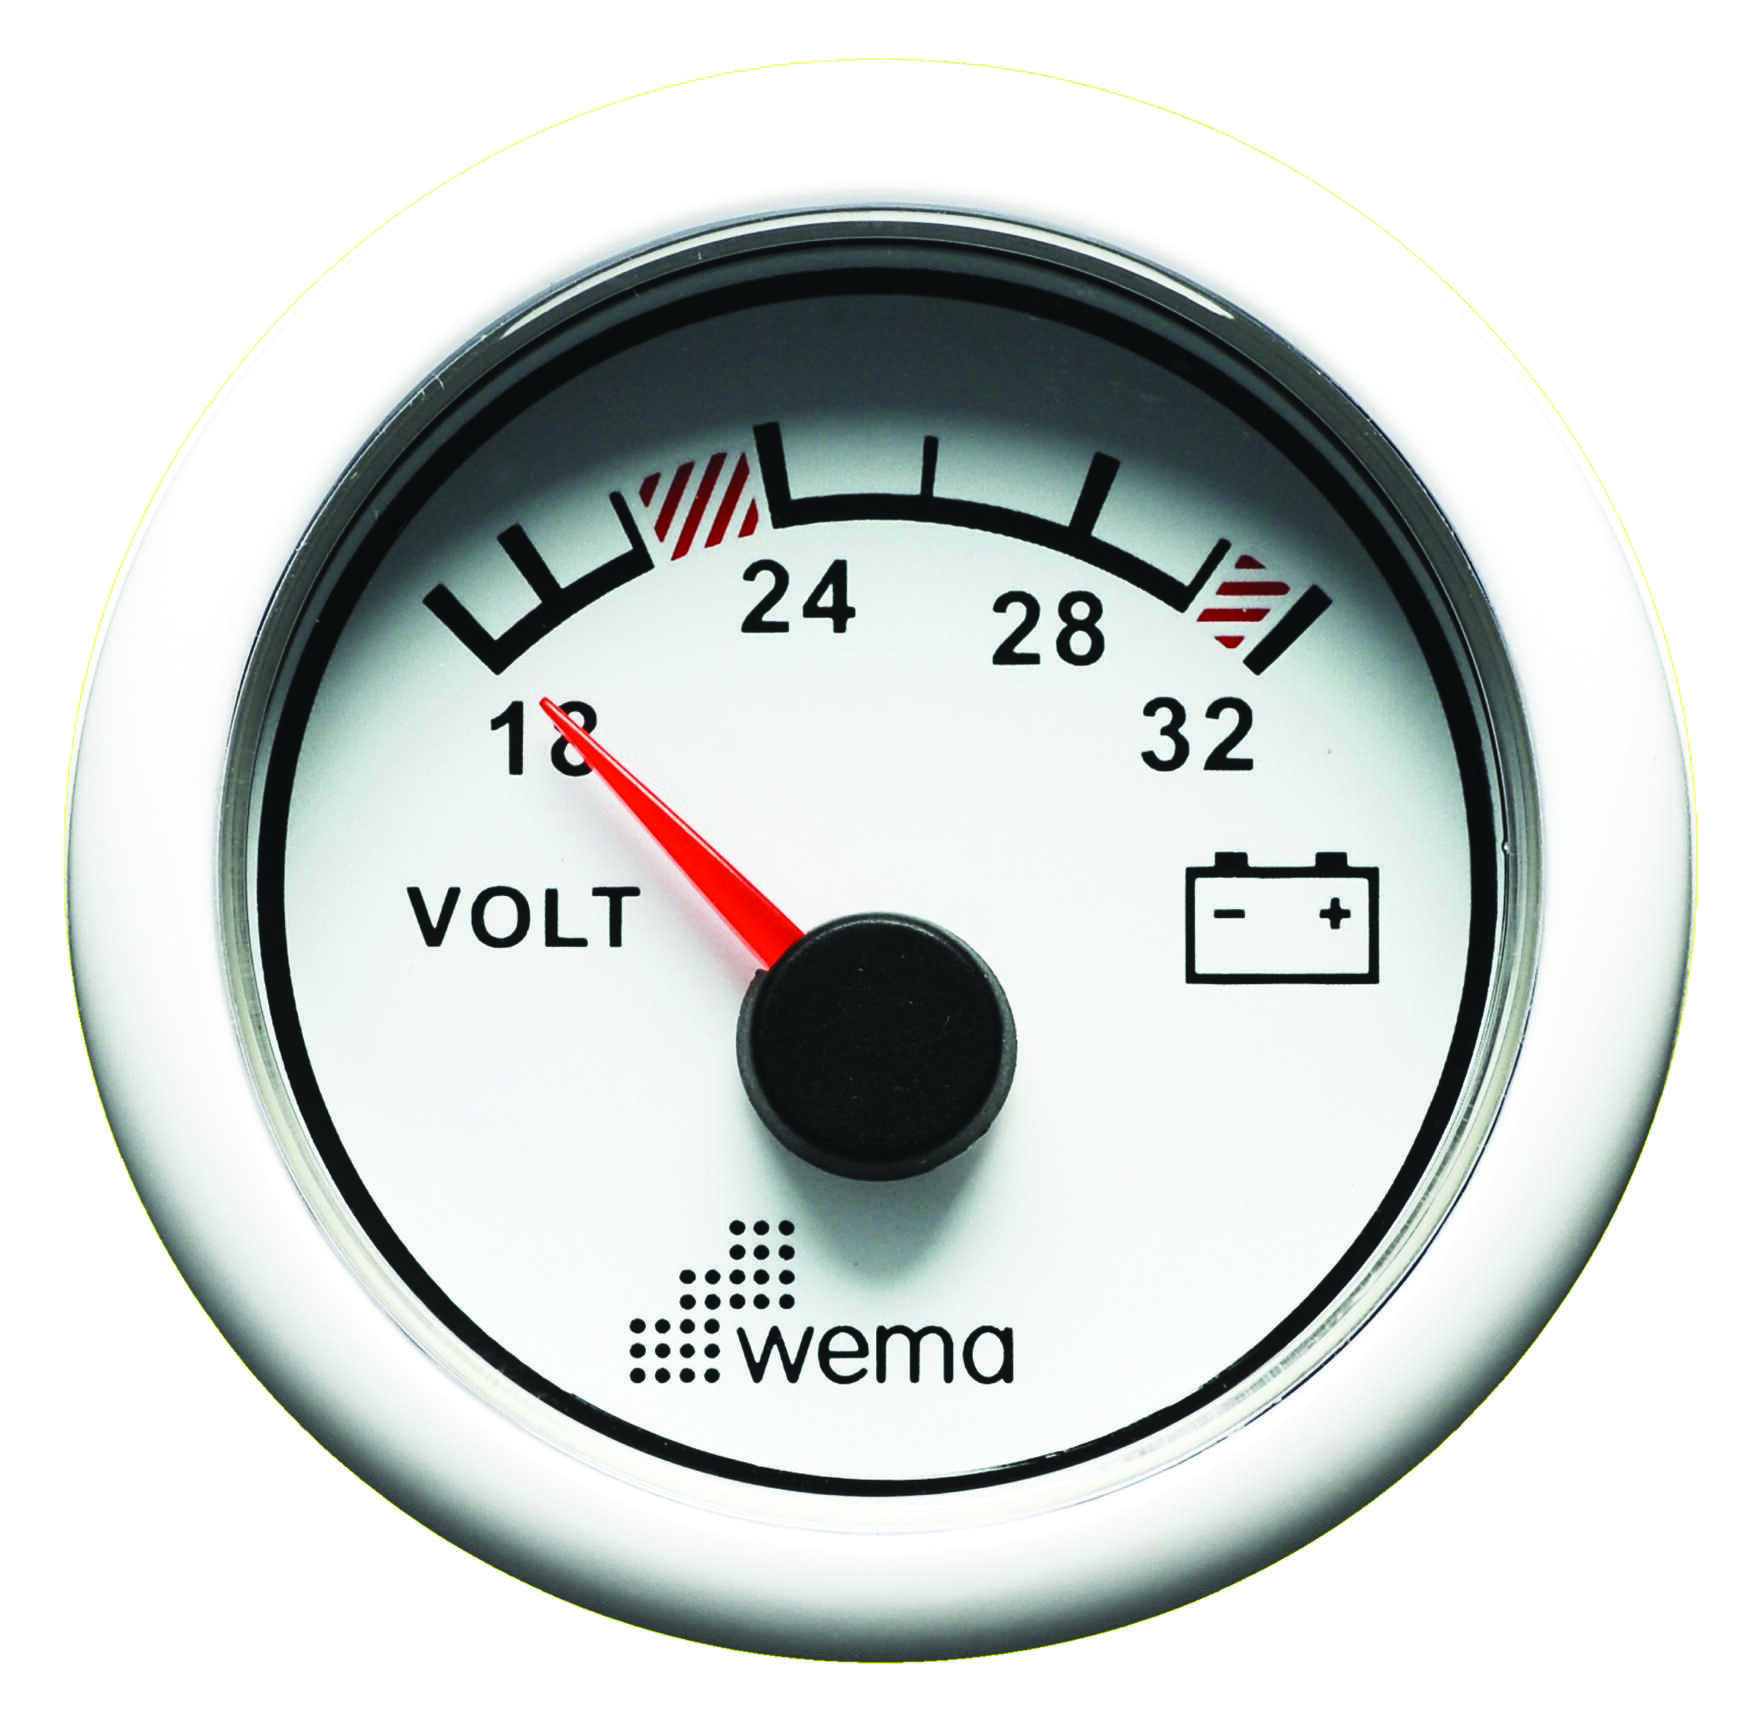 Wema Voltmeter